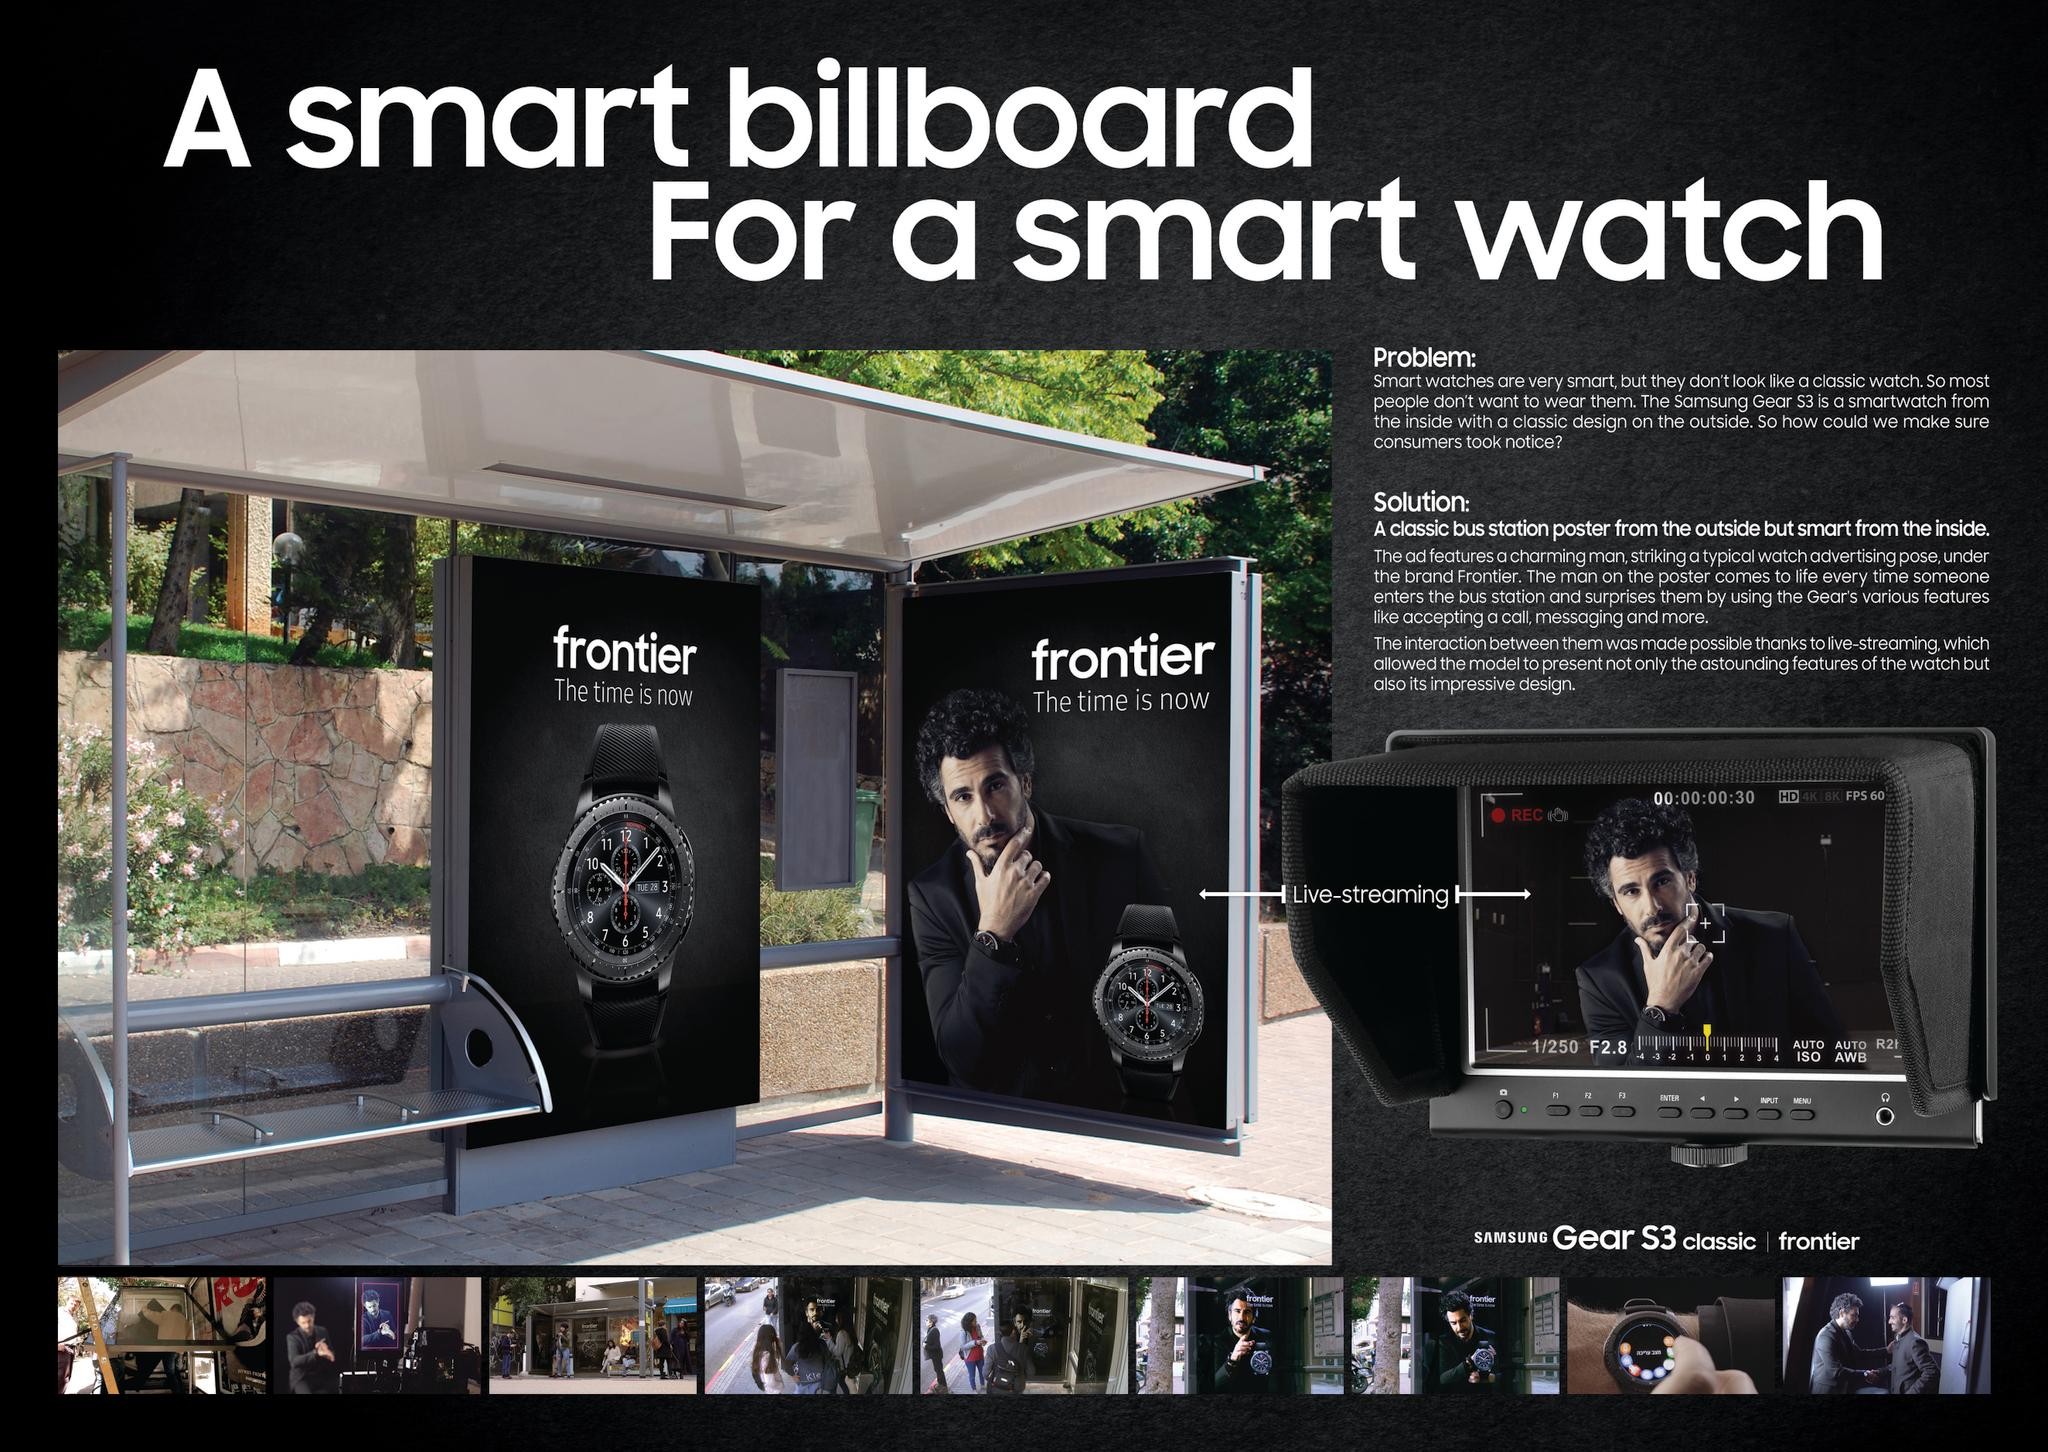 The smart billboard